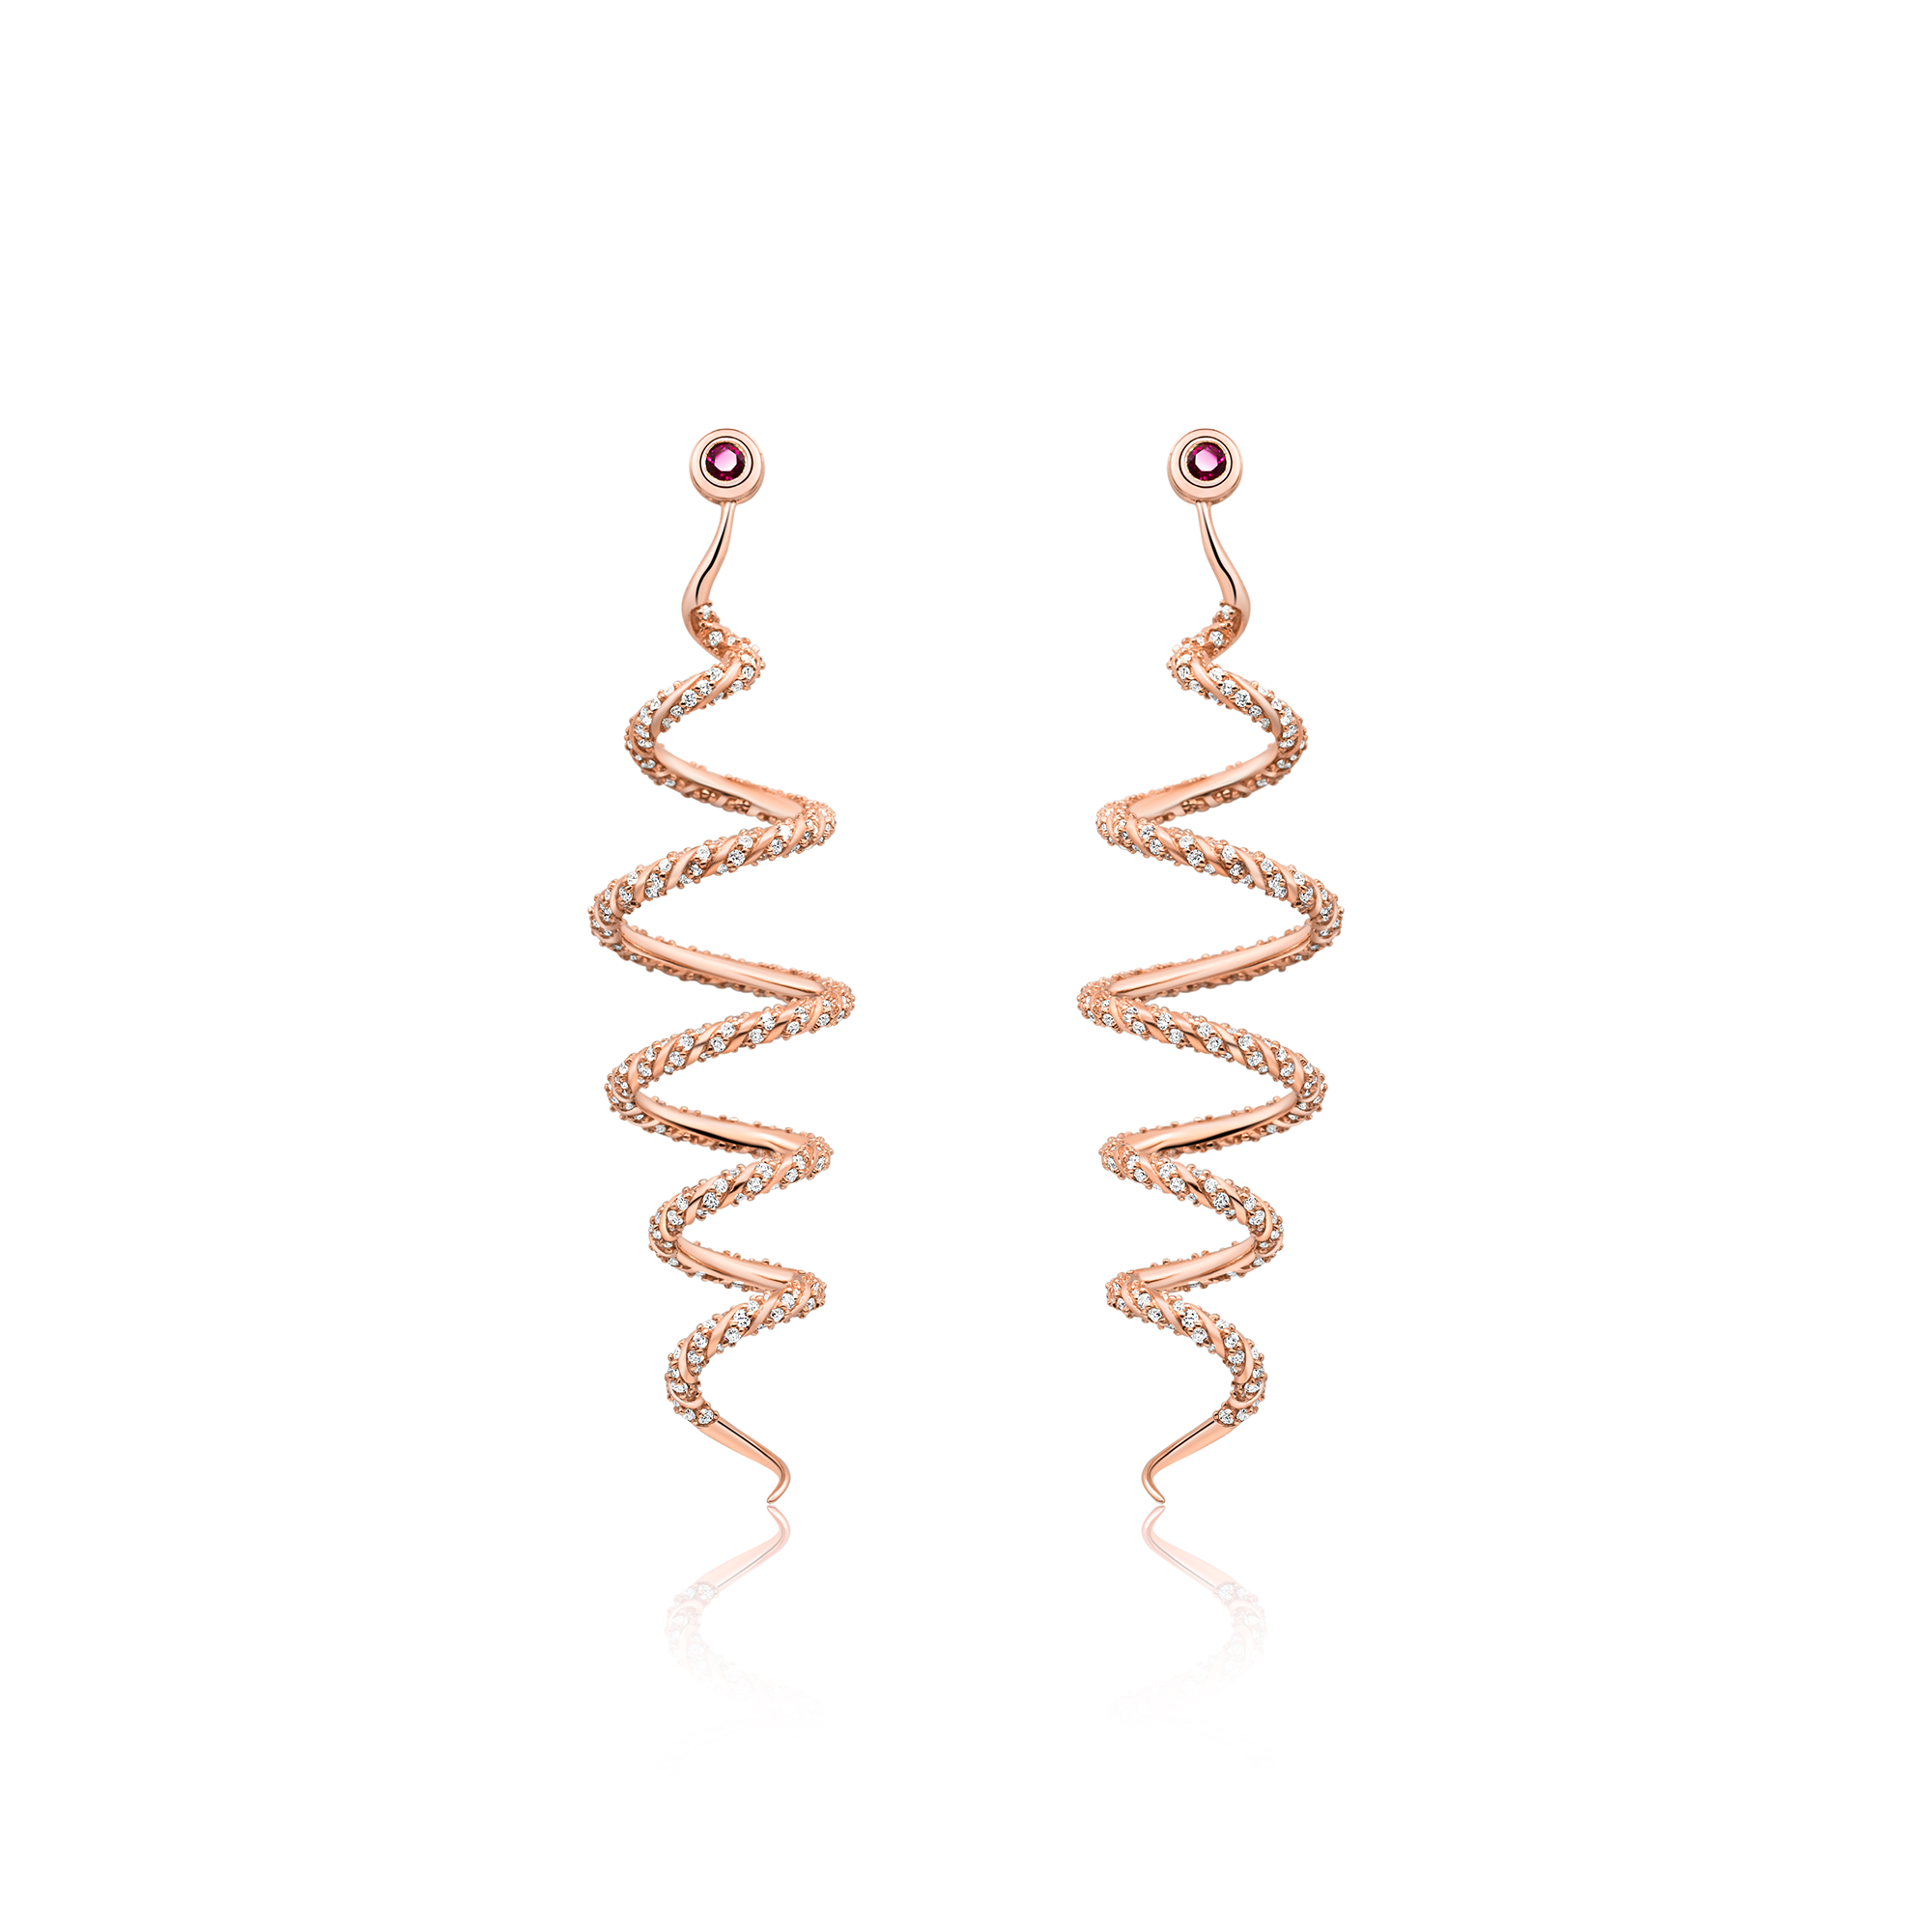 14K rose gold ruby diamond earrings designer statement jewelry wedding jewelry